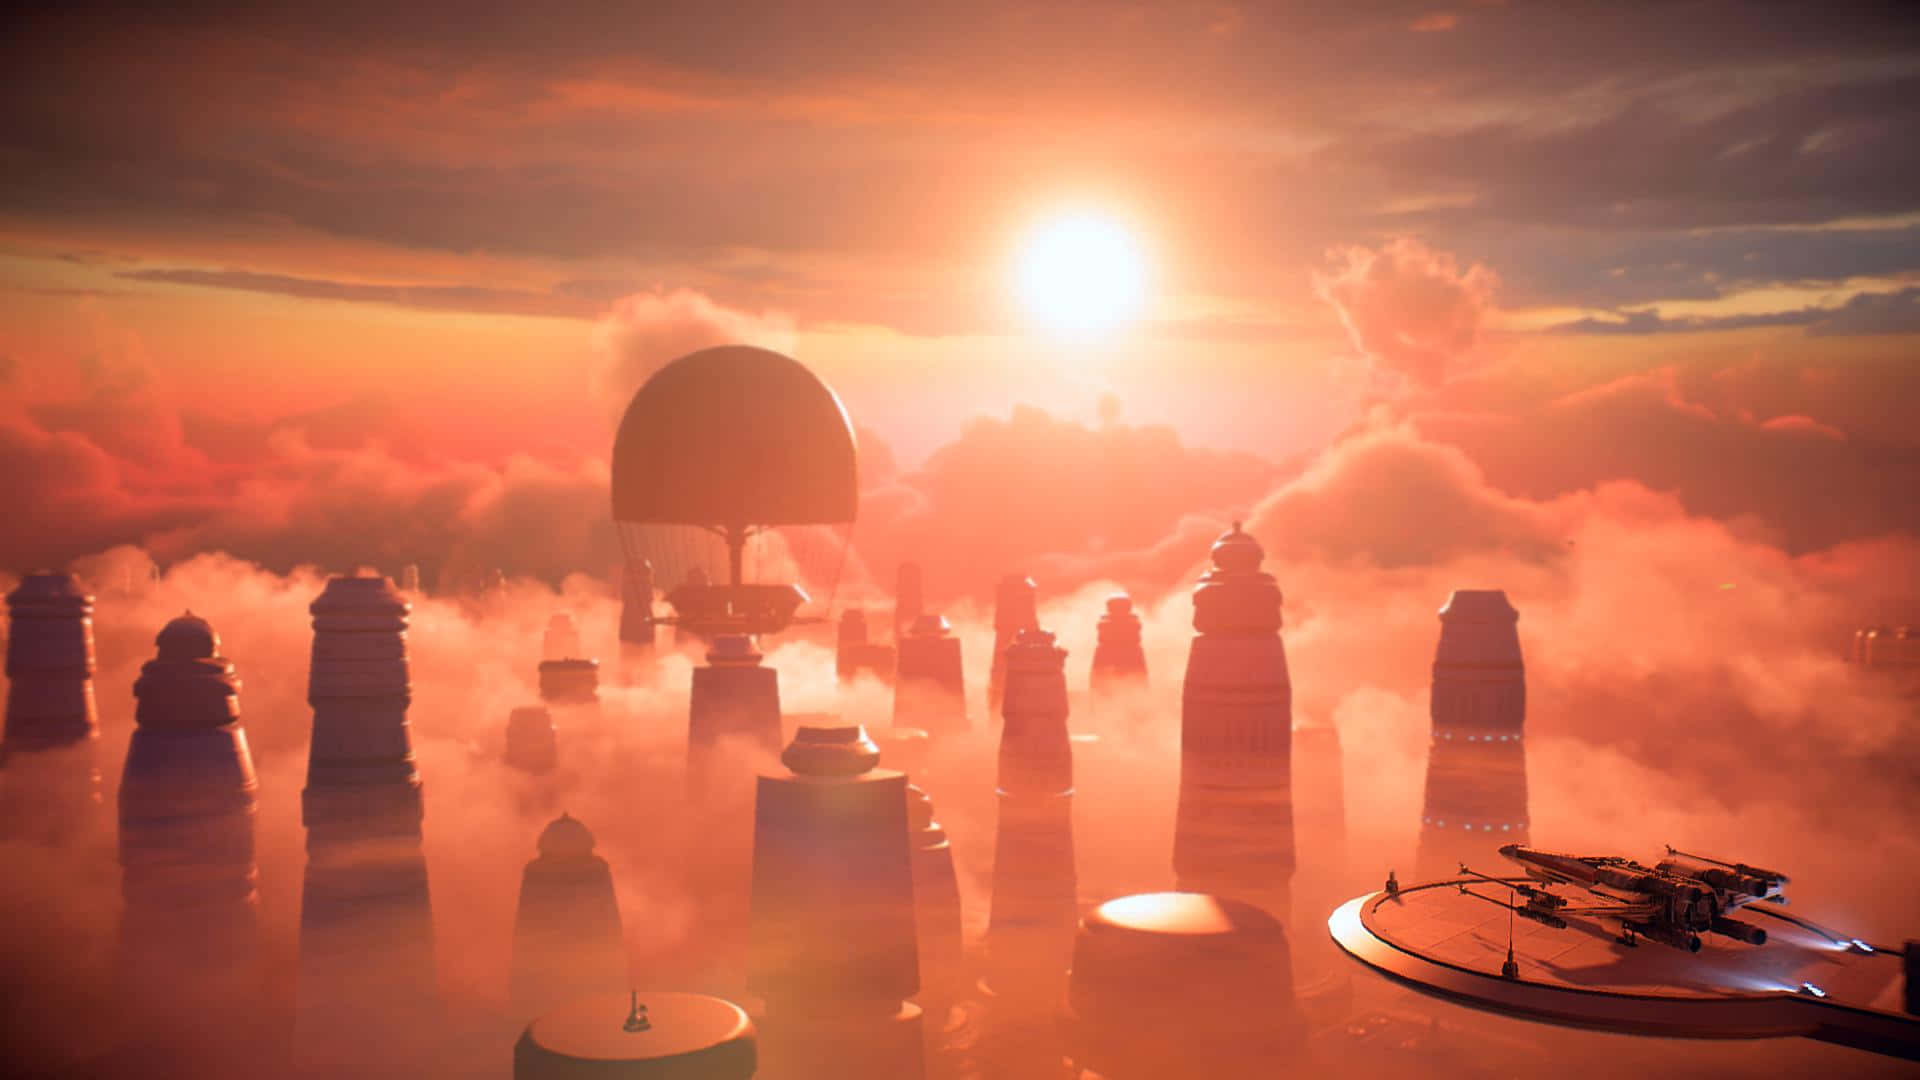 Bespin Cloud City as seen from  Tatooine - A Stunning Sci-Fi Landscape Wallpaper